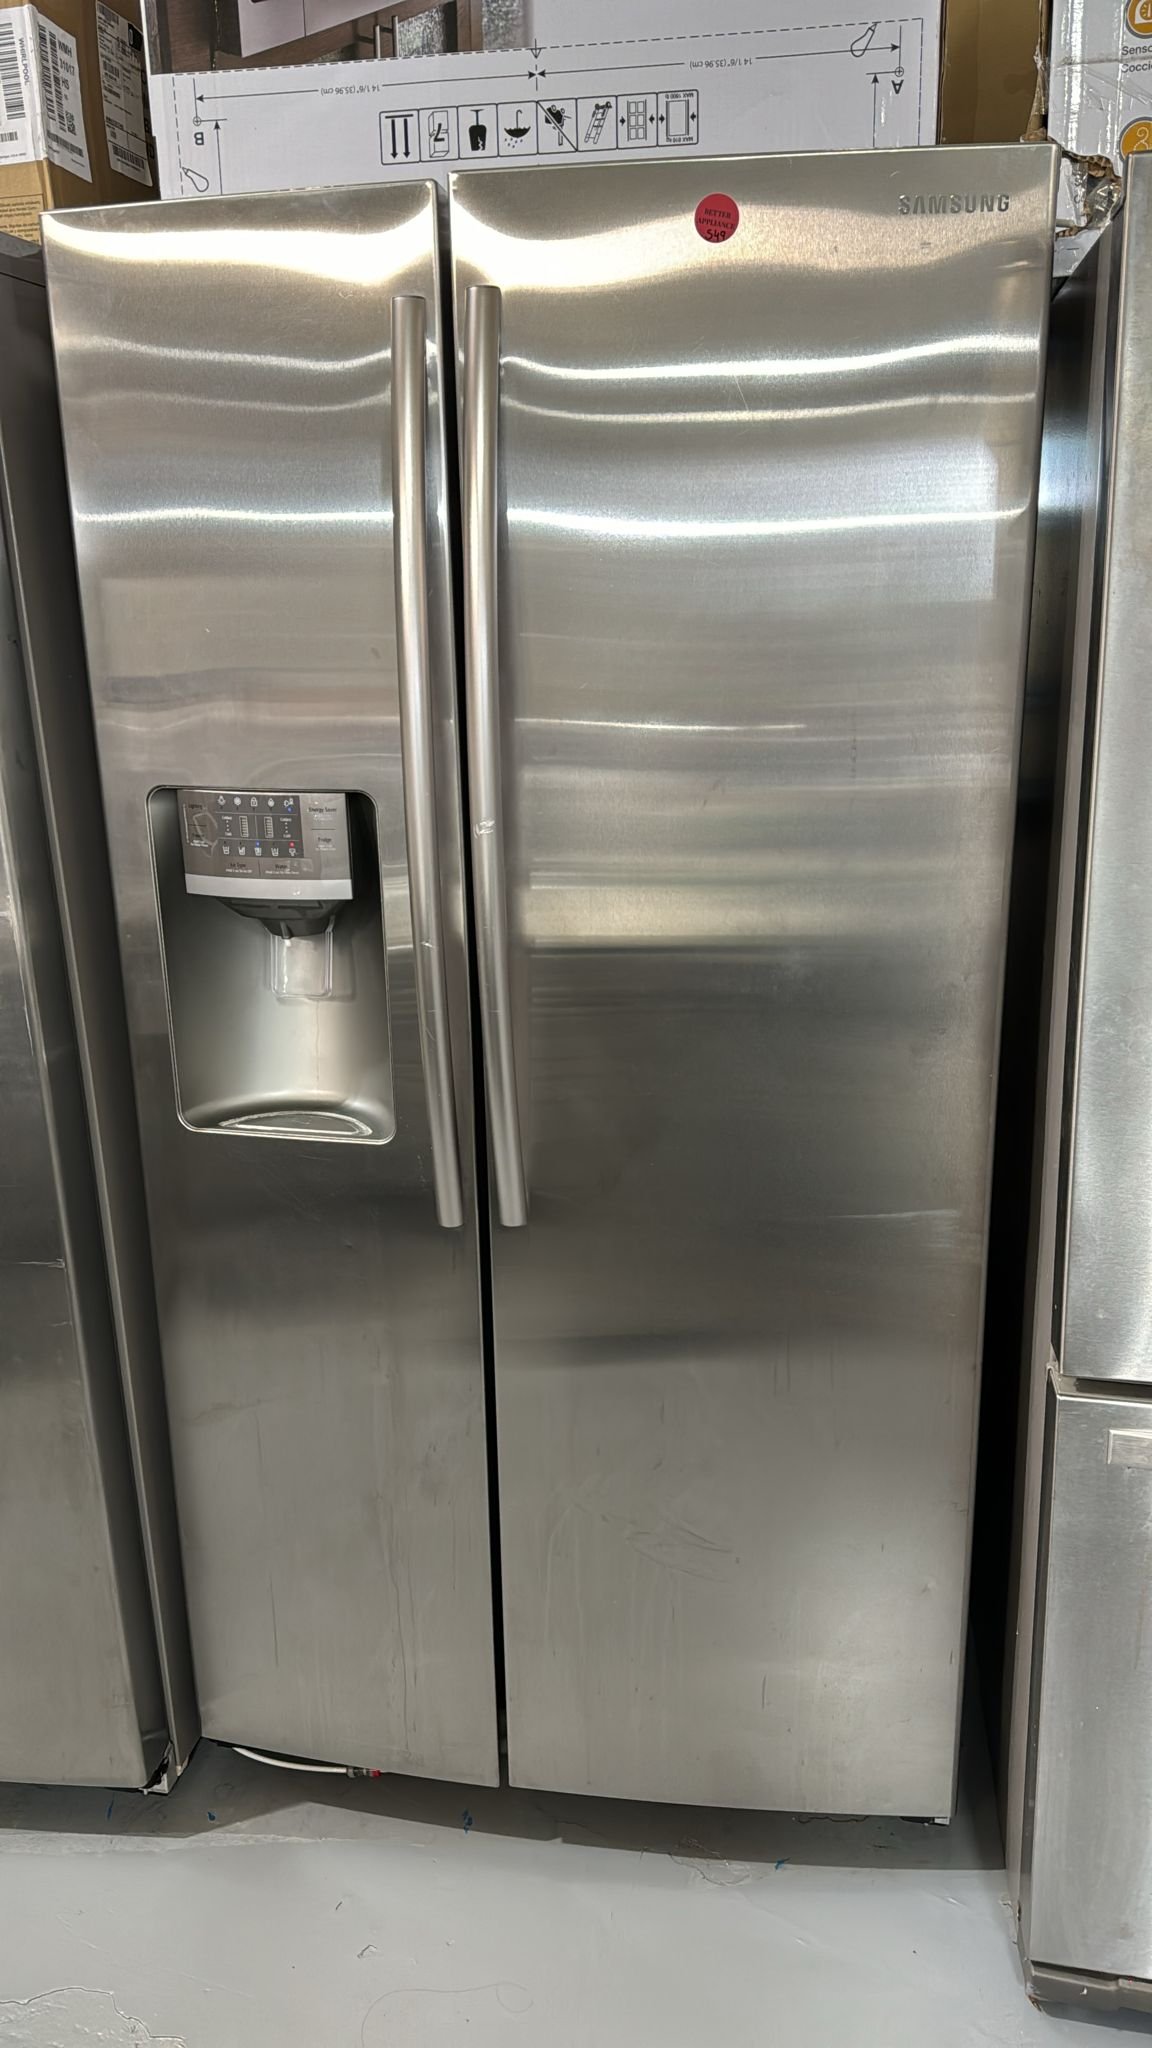 Samsung Used Side By Side Refrigerator